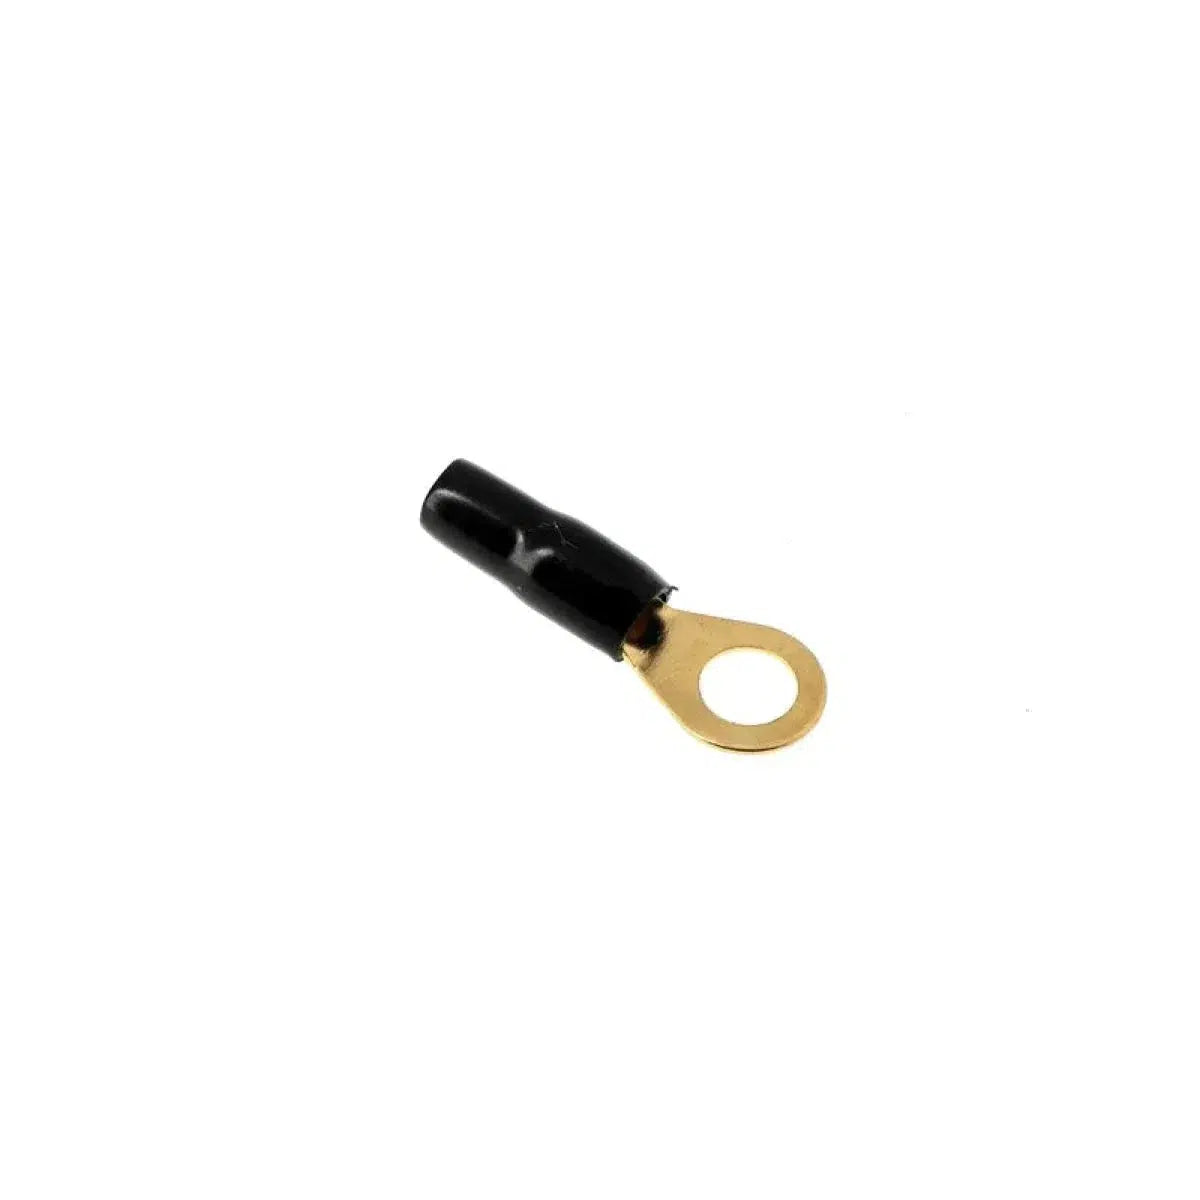 Masori-10mm²-50mm² ring black/red cable lug-Masori.co.uk